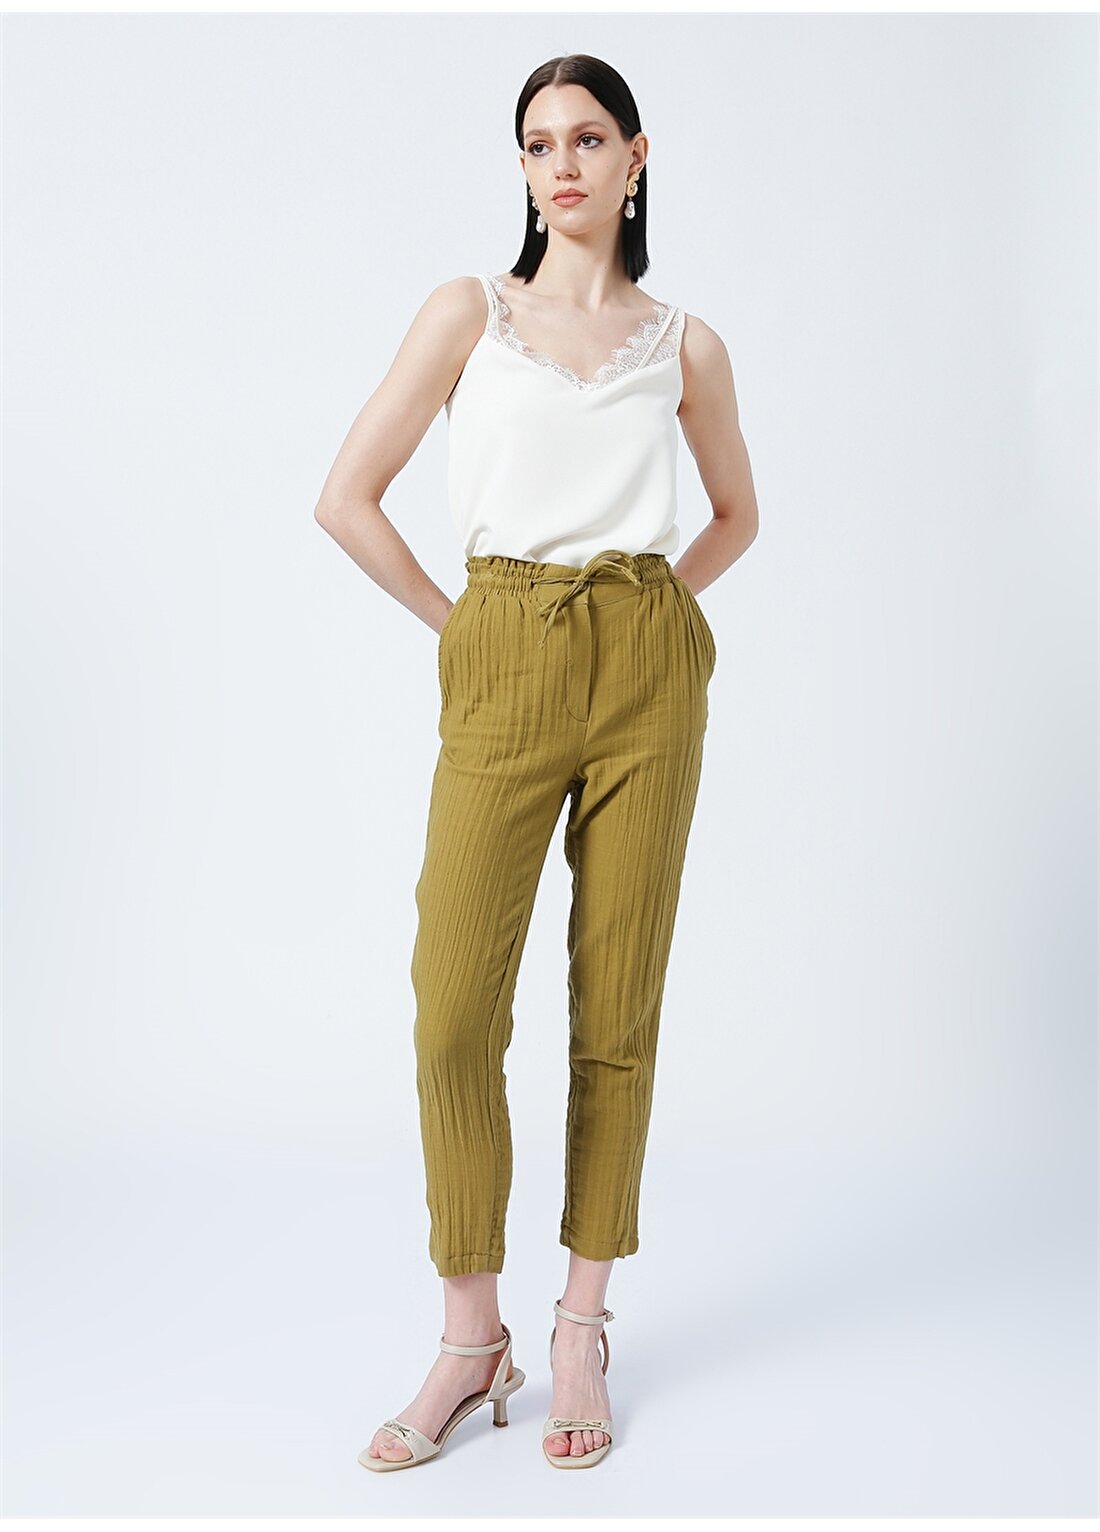 Fabrika Sam Lastikli Basic Düz Yağ Yeşili Kadın Pantolon